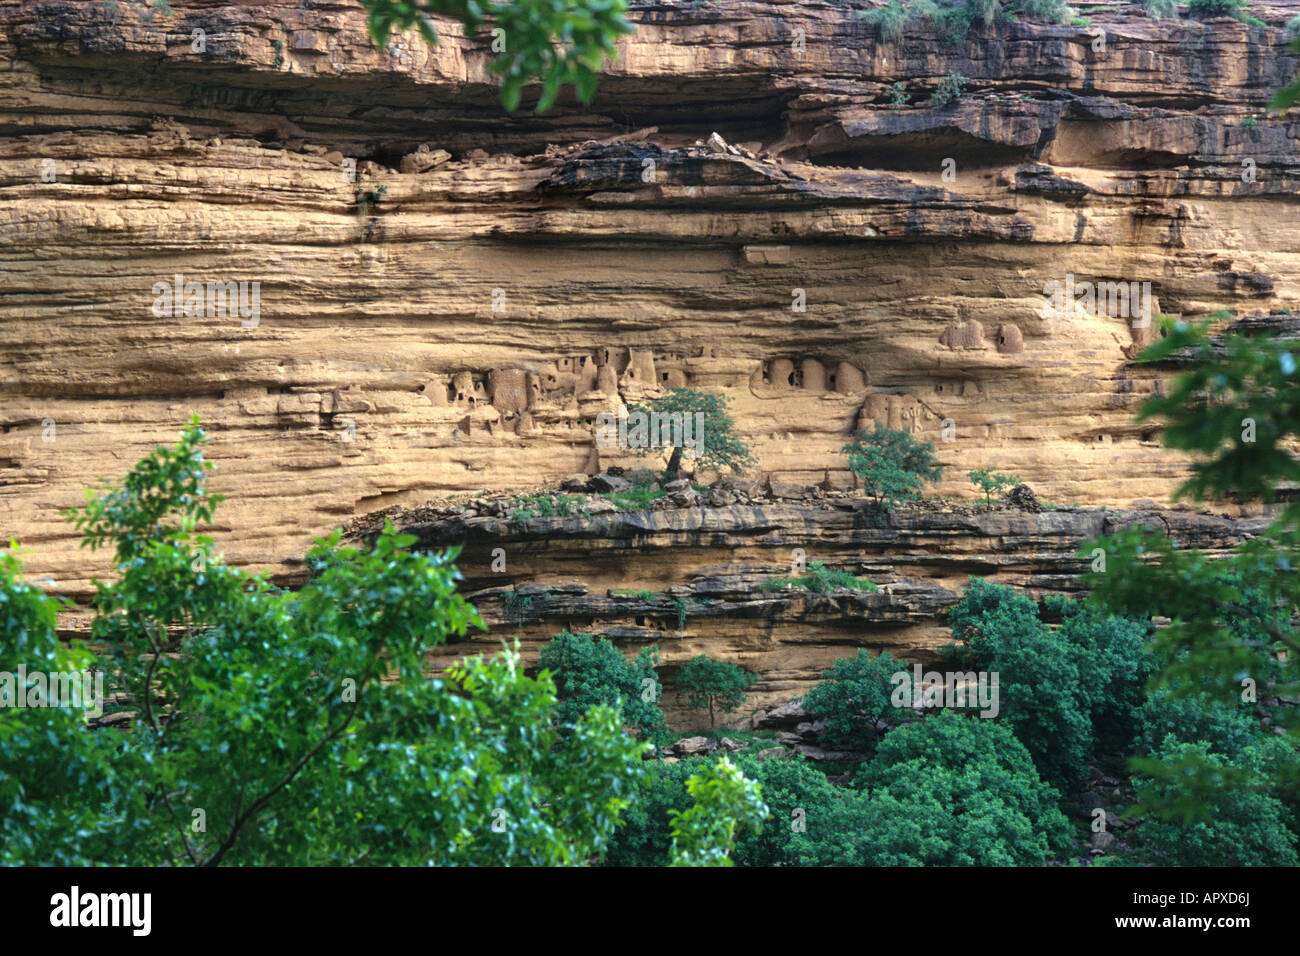 Bandiagara cliff dwellings Stock Photo